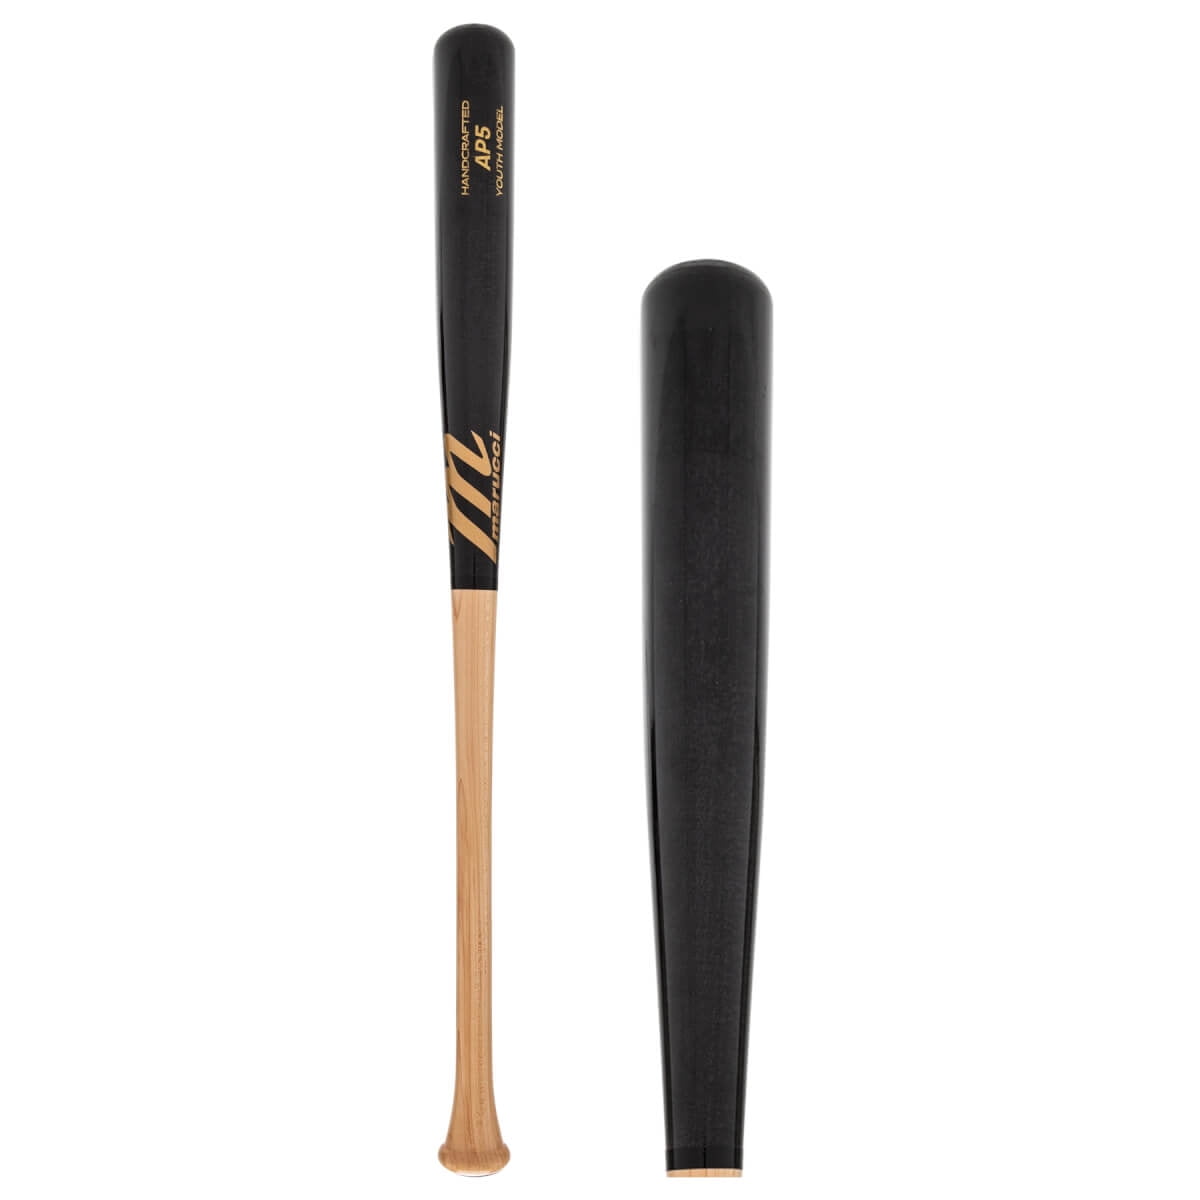 Wood Baseball Bats 34" BLEM BATS Maple 